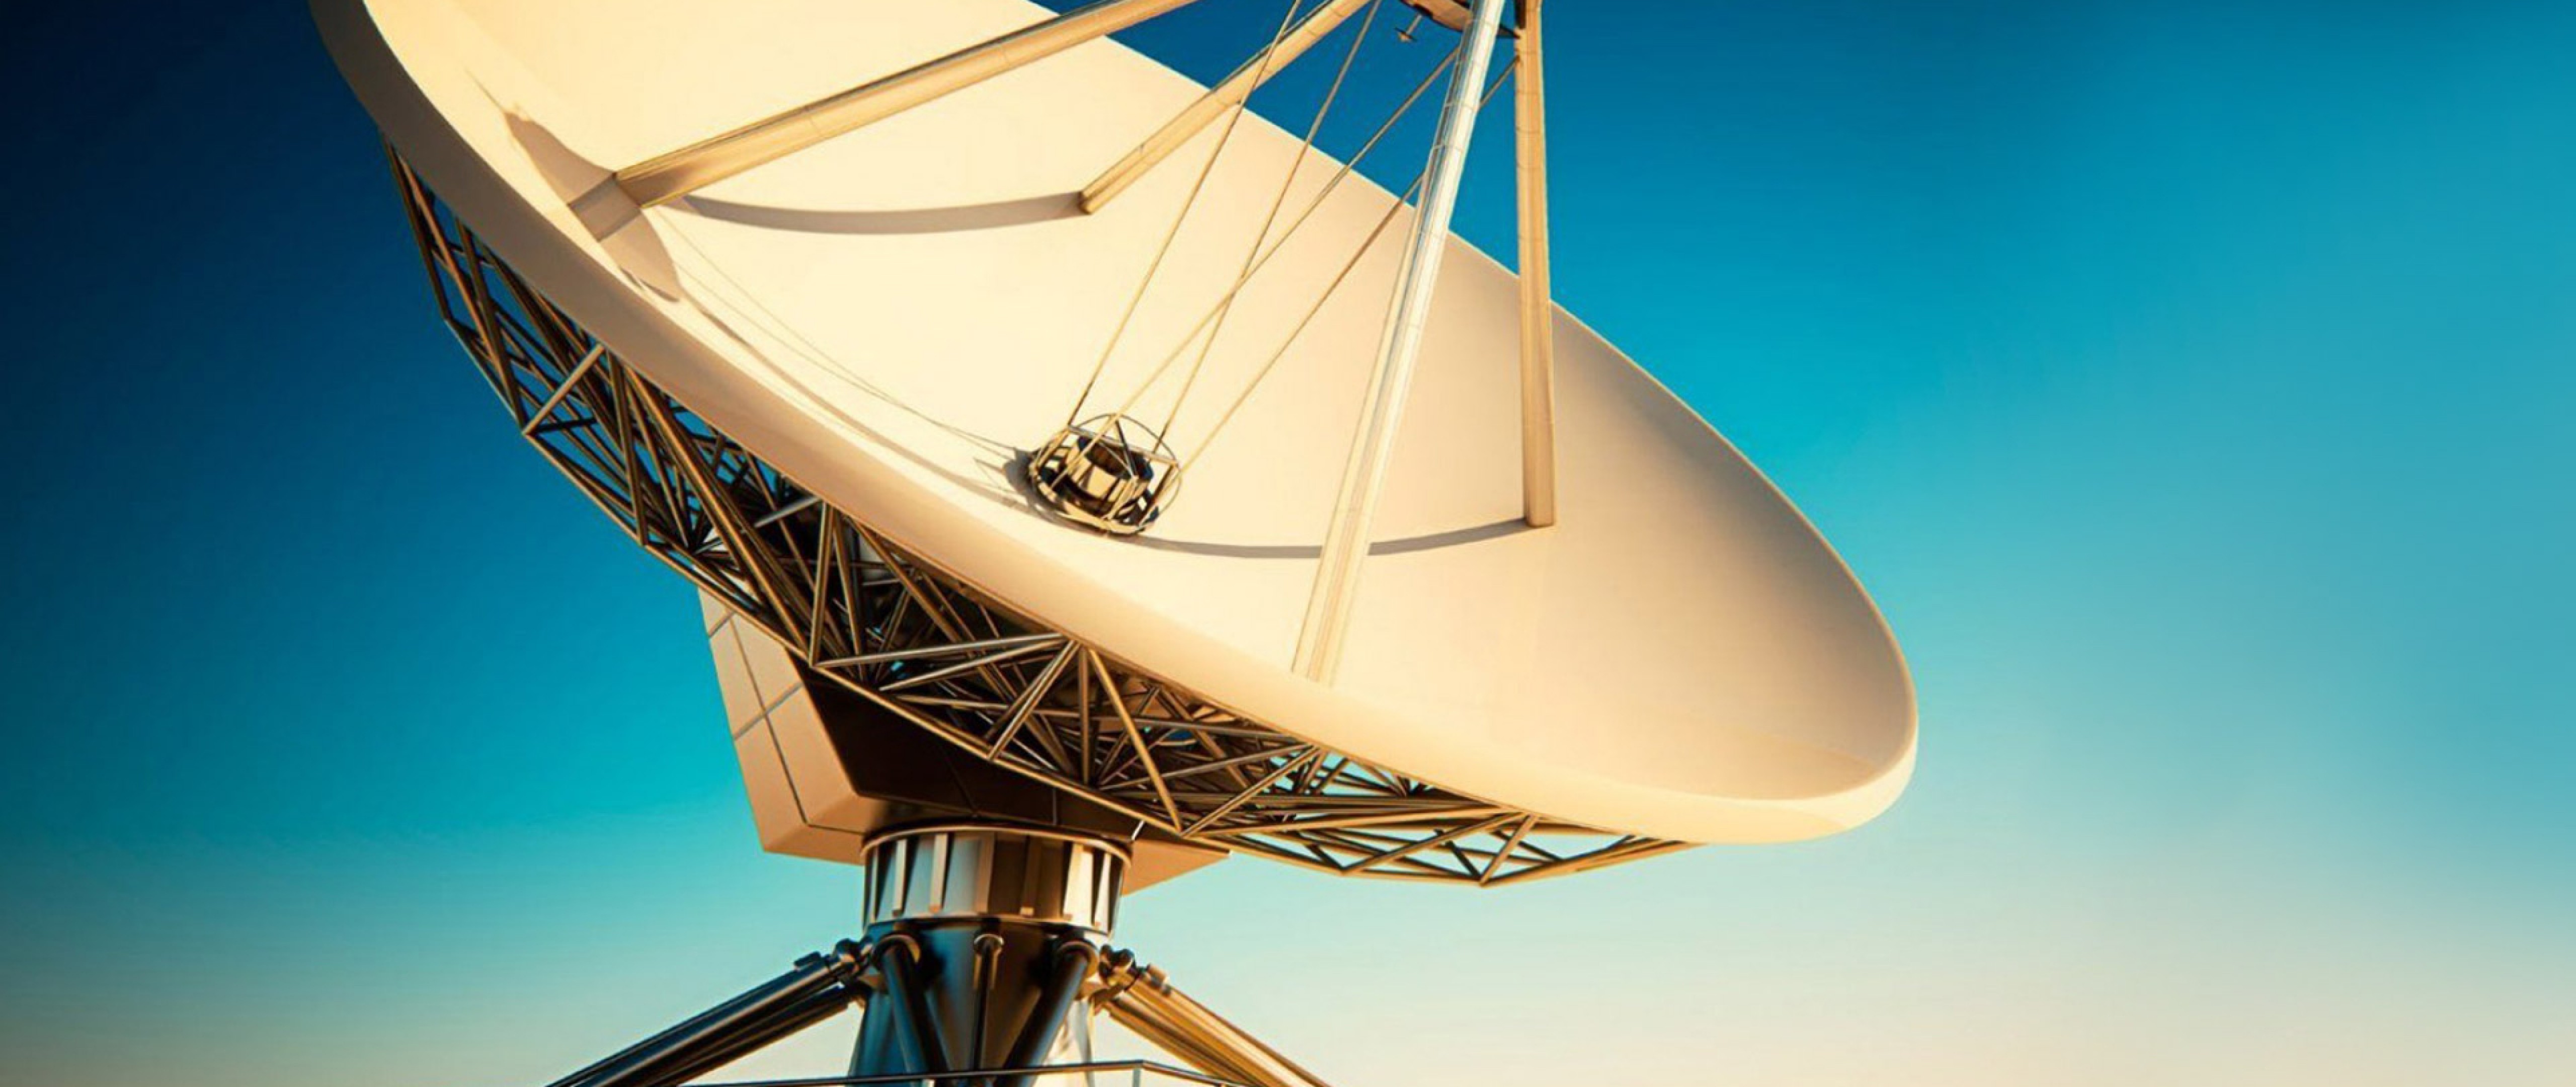 Satellite dish. Спутниковая параболическая антенна. Спутниковая антенна Starlink. Параболическая антенна для спутниковой связи. Огромная спутниковая тарелка.